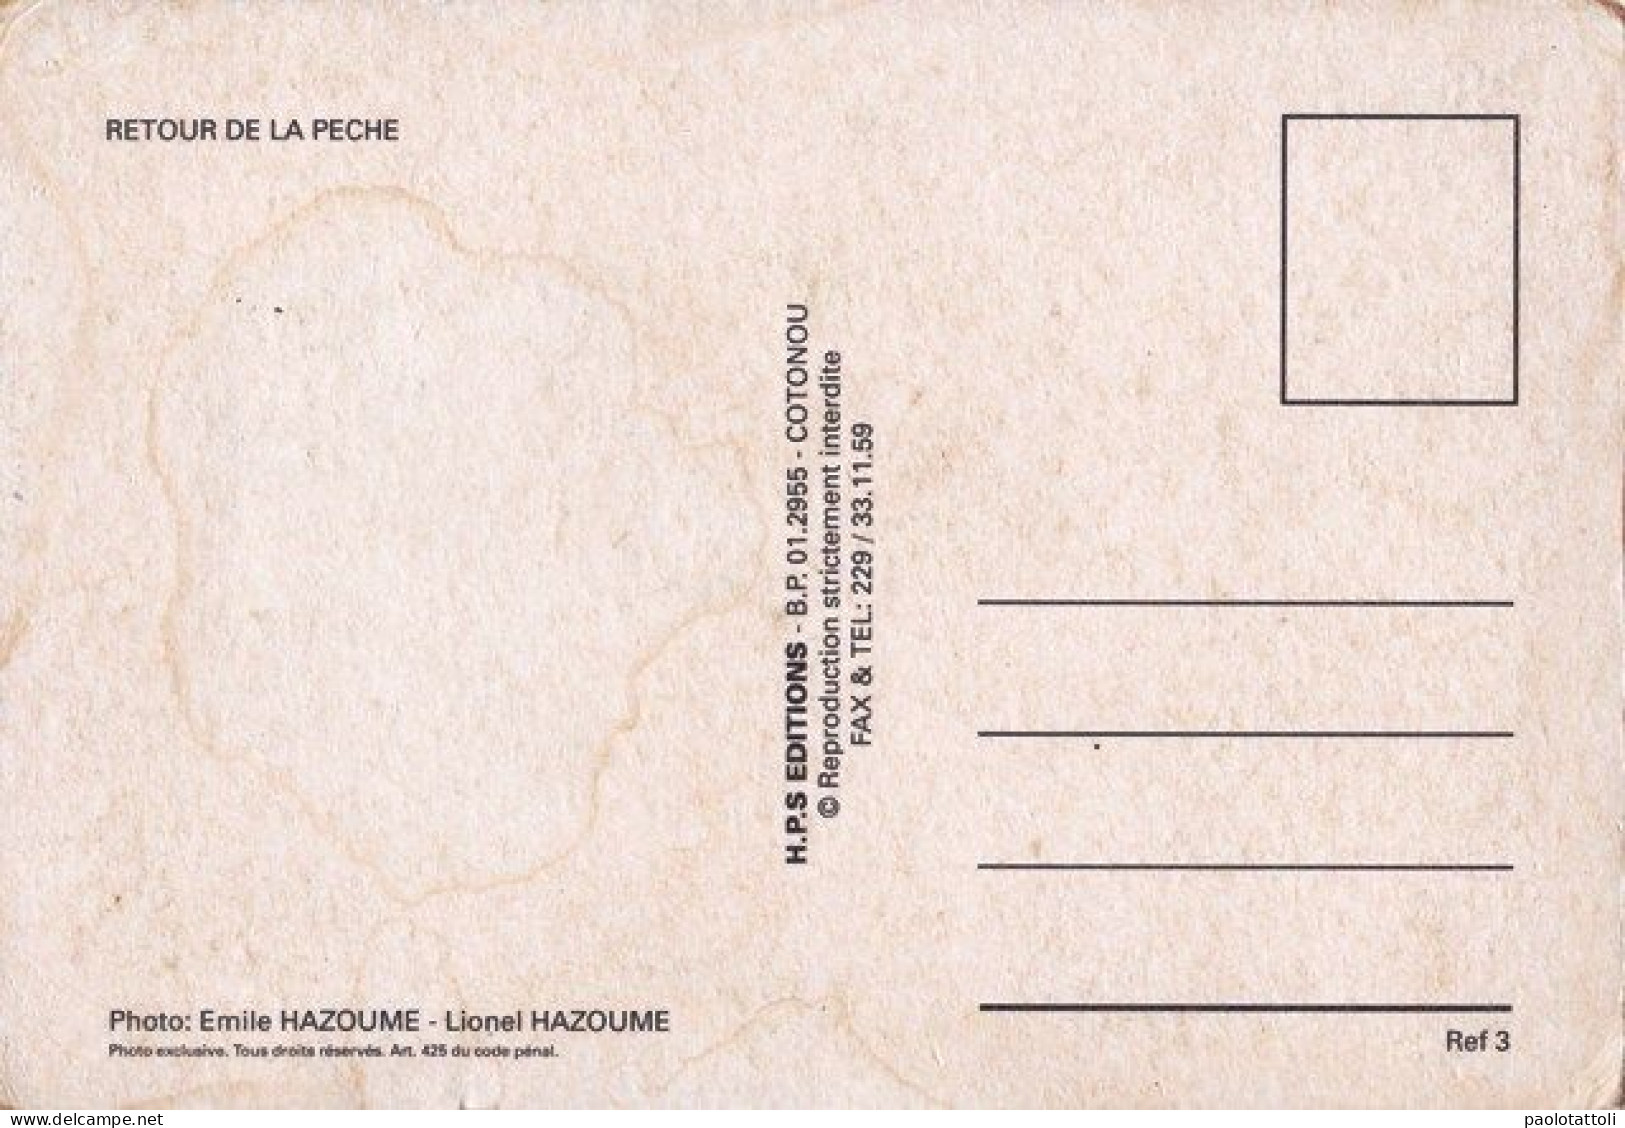 Benin, Retour De La Peche. Photo E.Hazooume-Lionel Hazoume. Verso Divided, Standard Size, New. HPS Editions- Cotonou - Benin